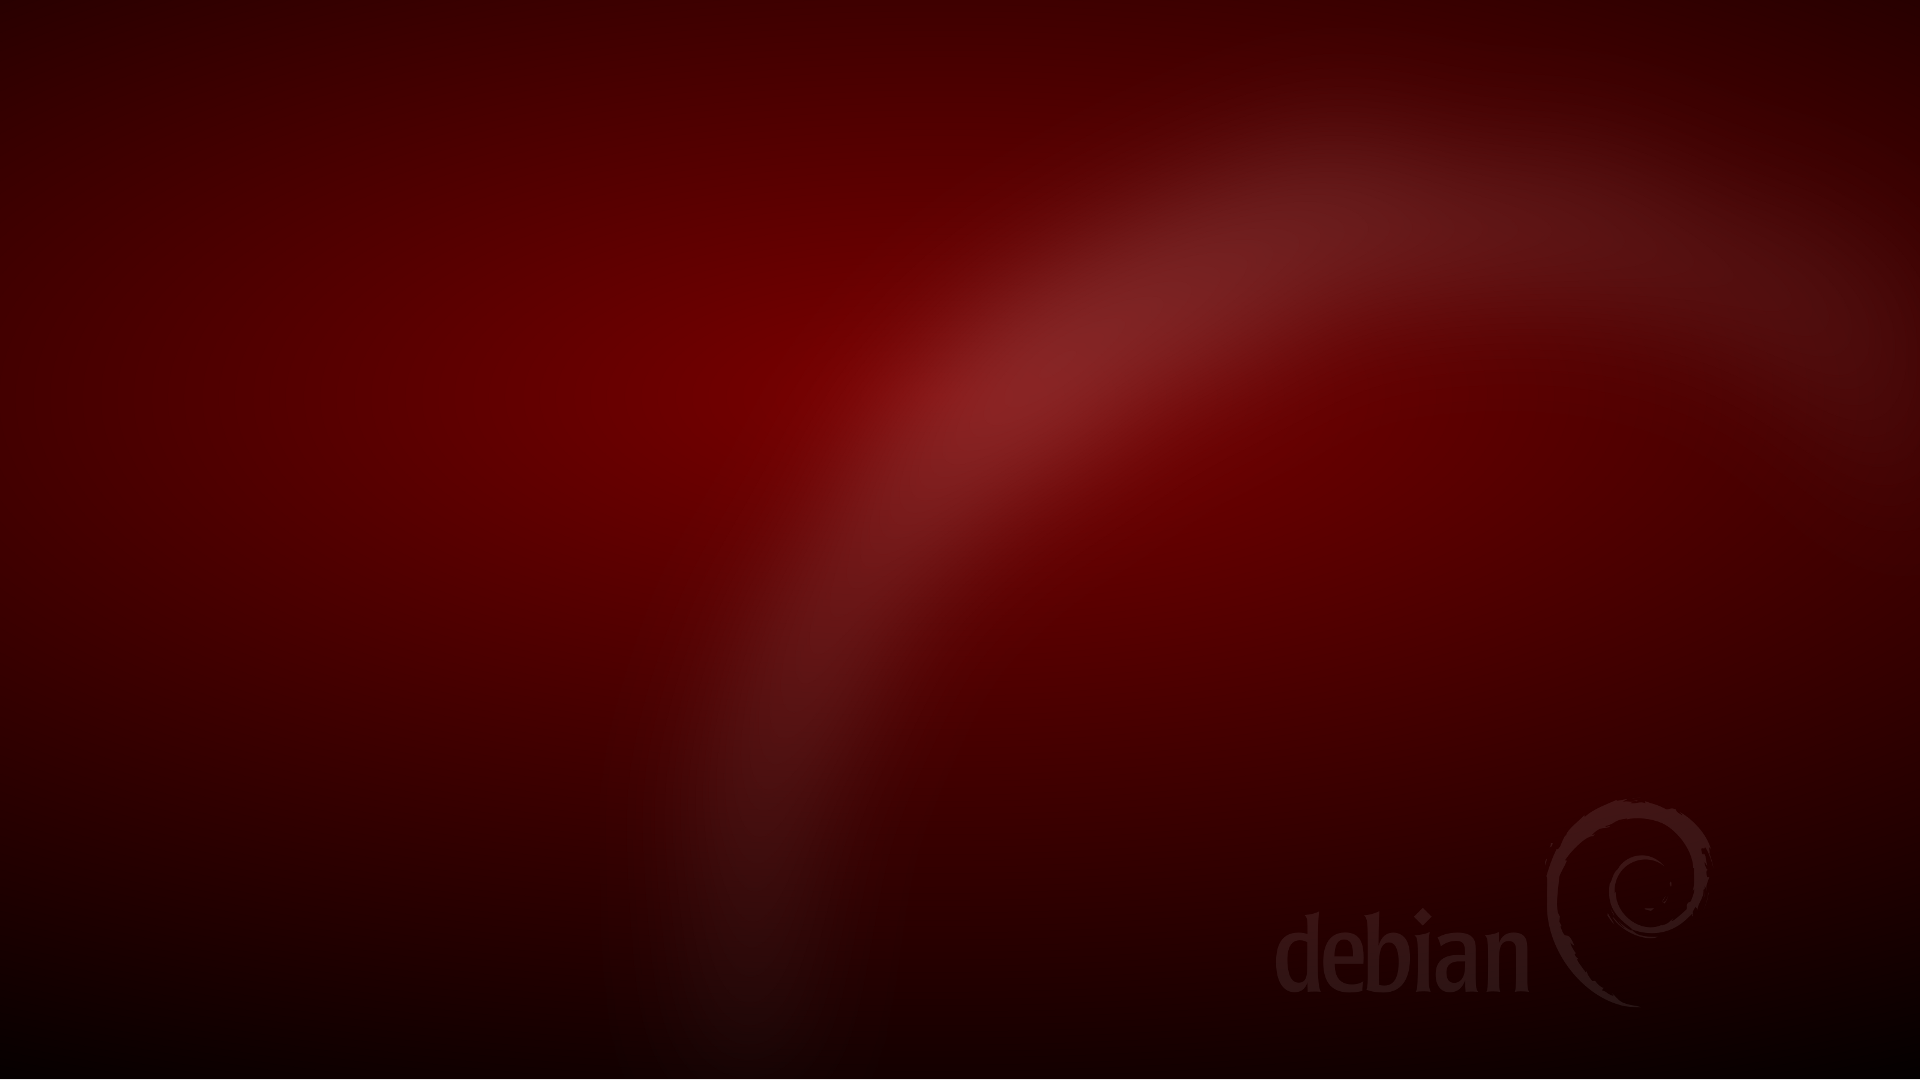 The red side of debian Wallpaper - fedemos